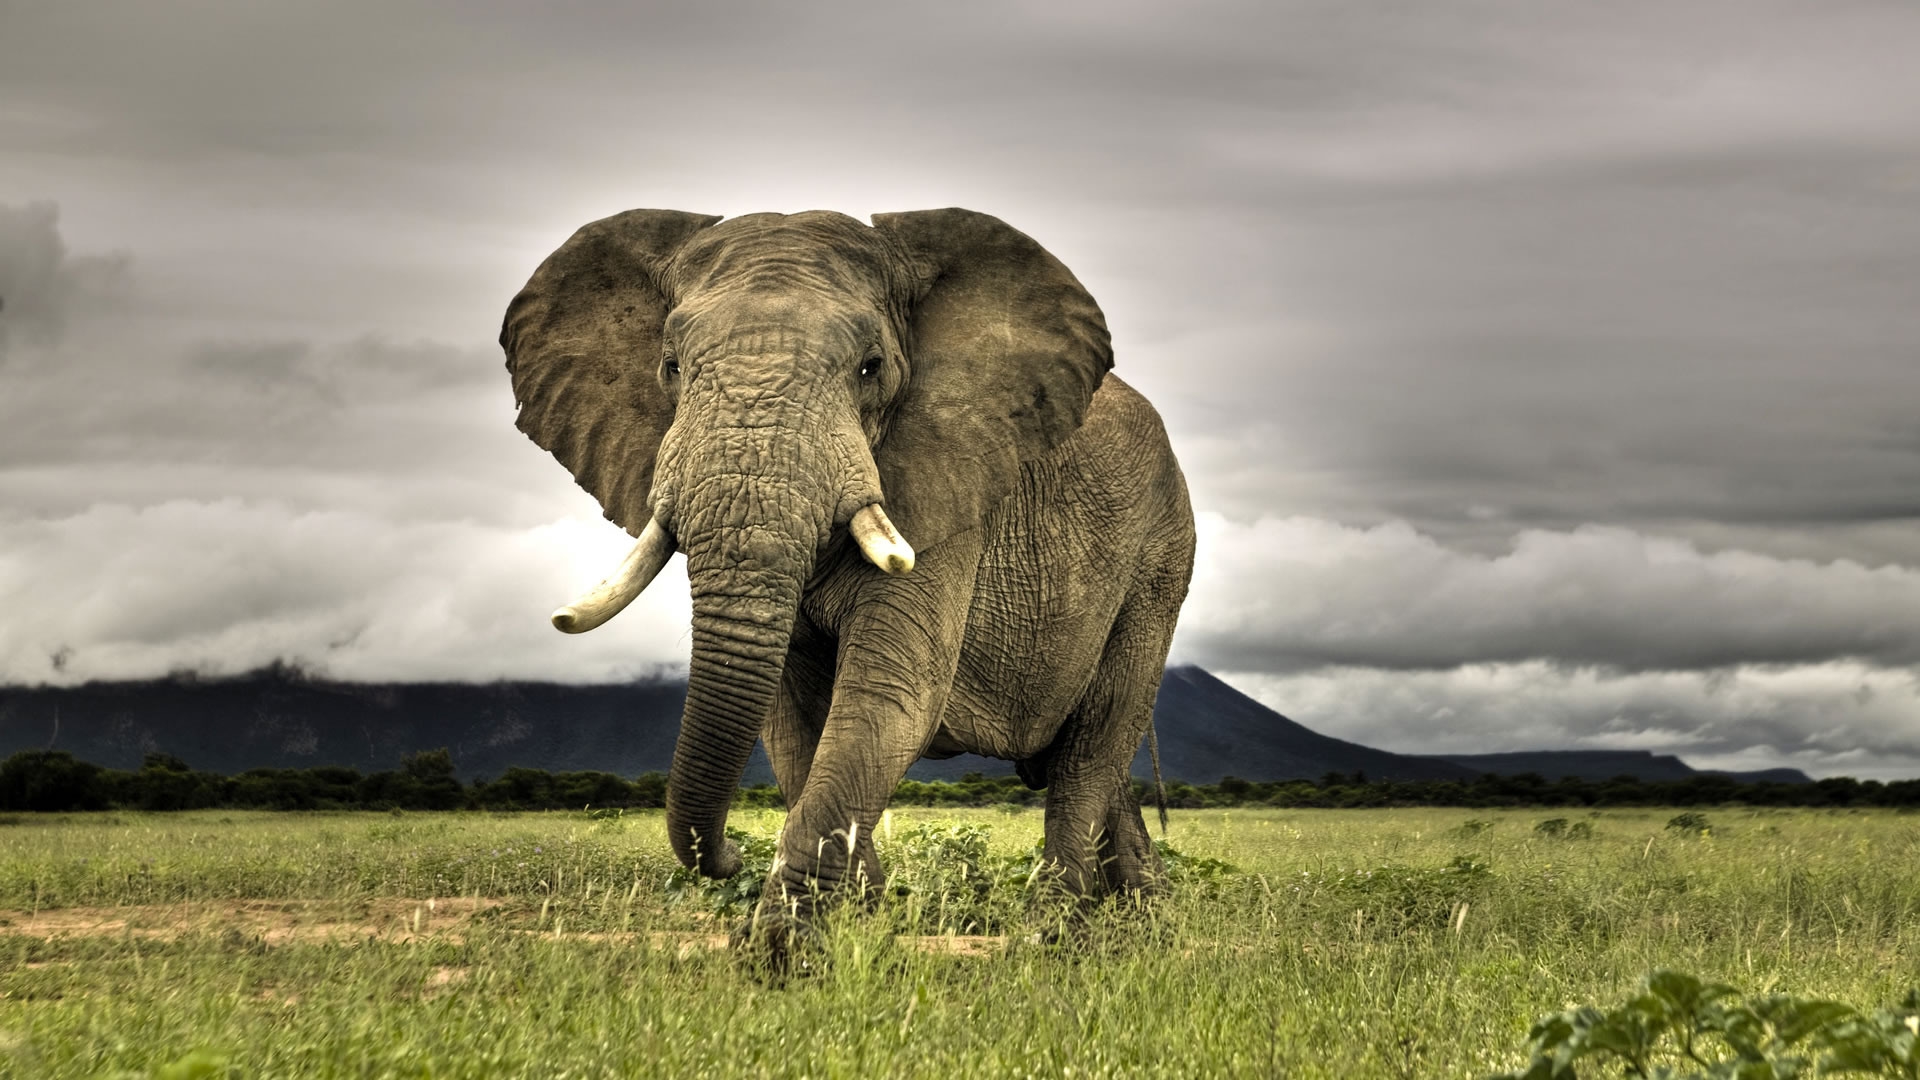 Amazing Elephant for 1920 x 1080 HDTV 1080p resolution